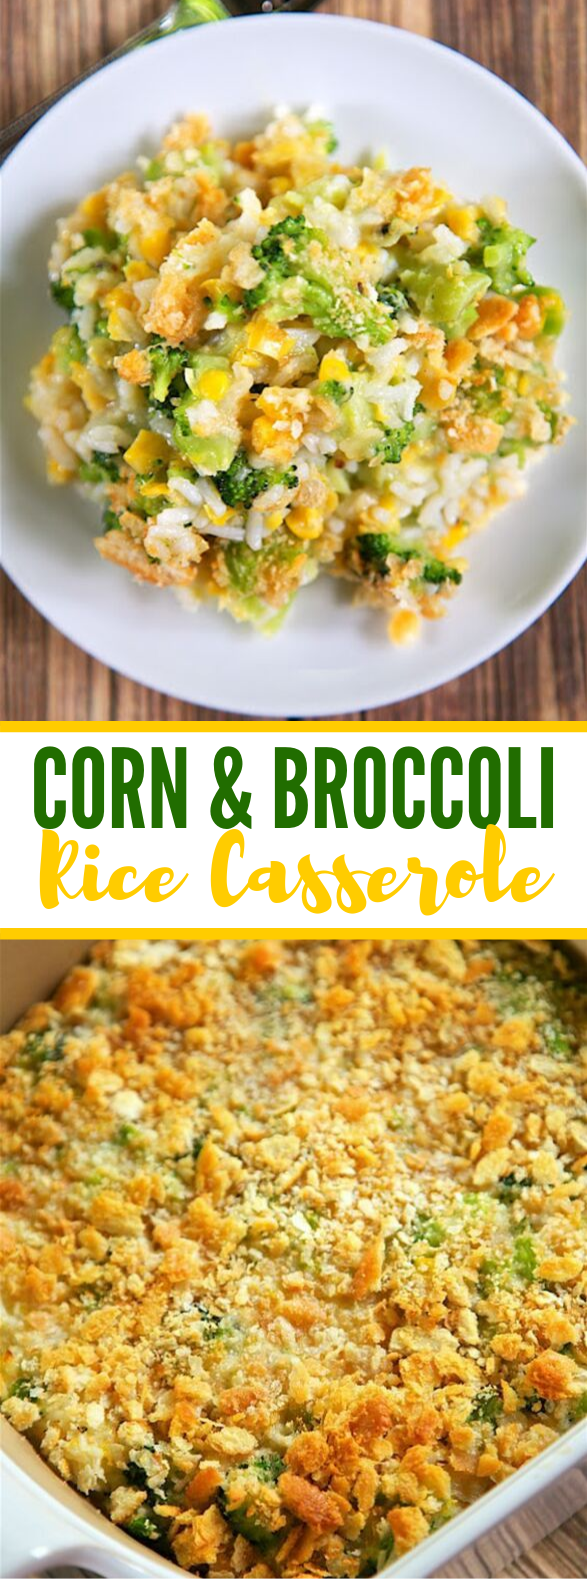 CORN AND BROCCOLI RICE CASSEROLE #vegetarian #easyrecipes